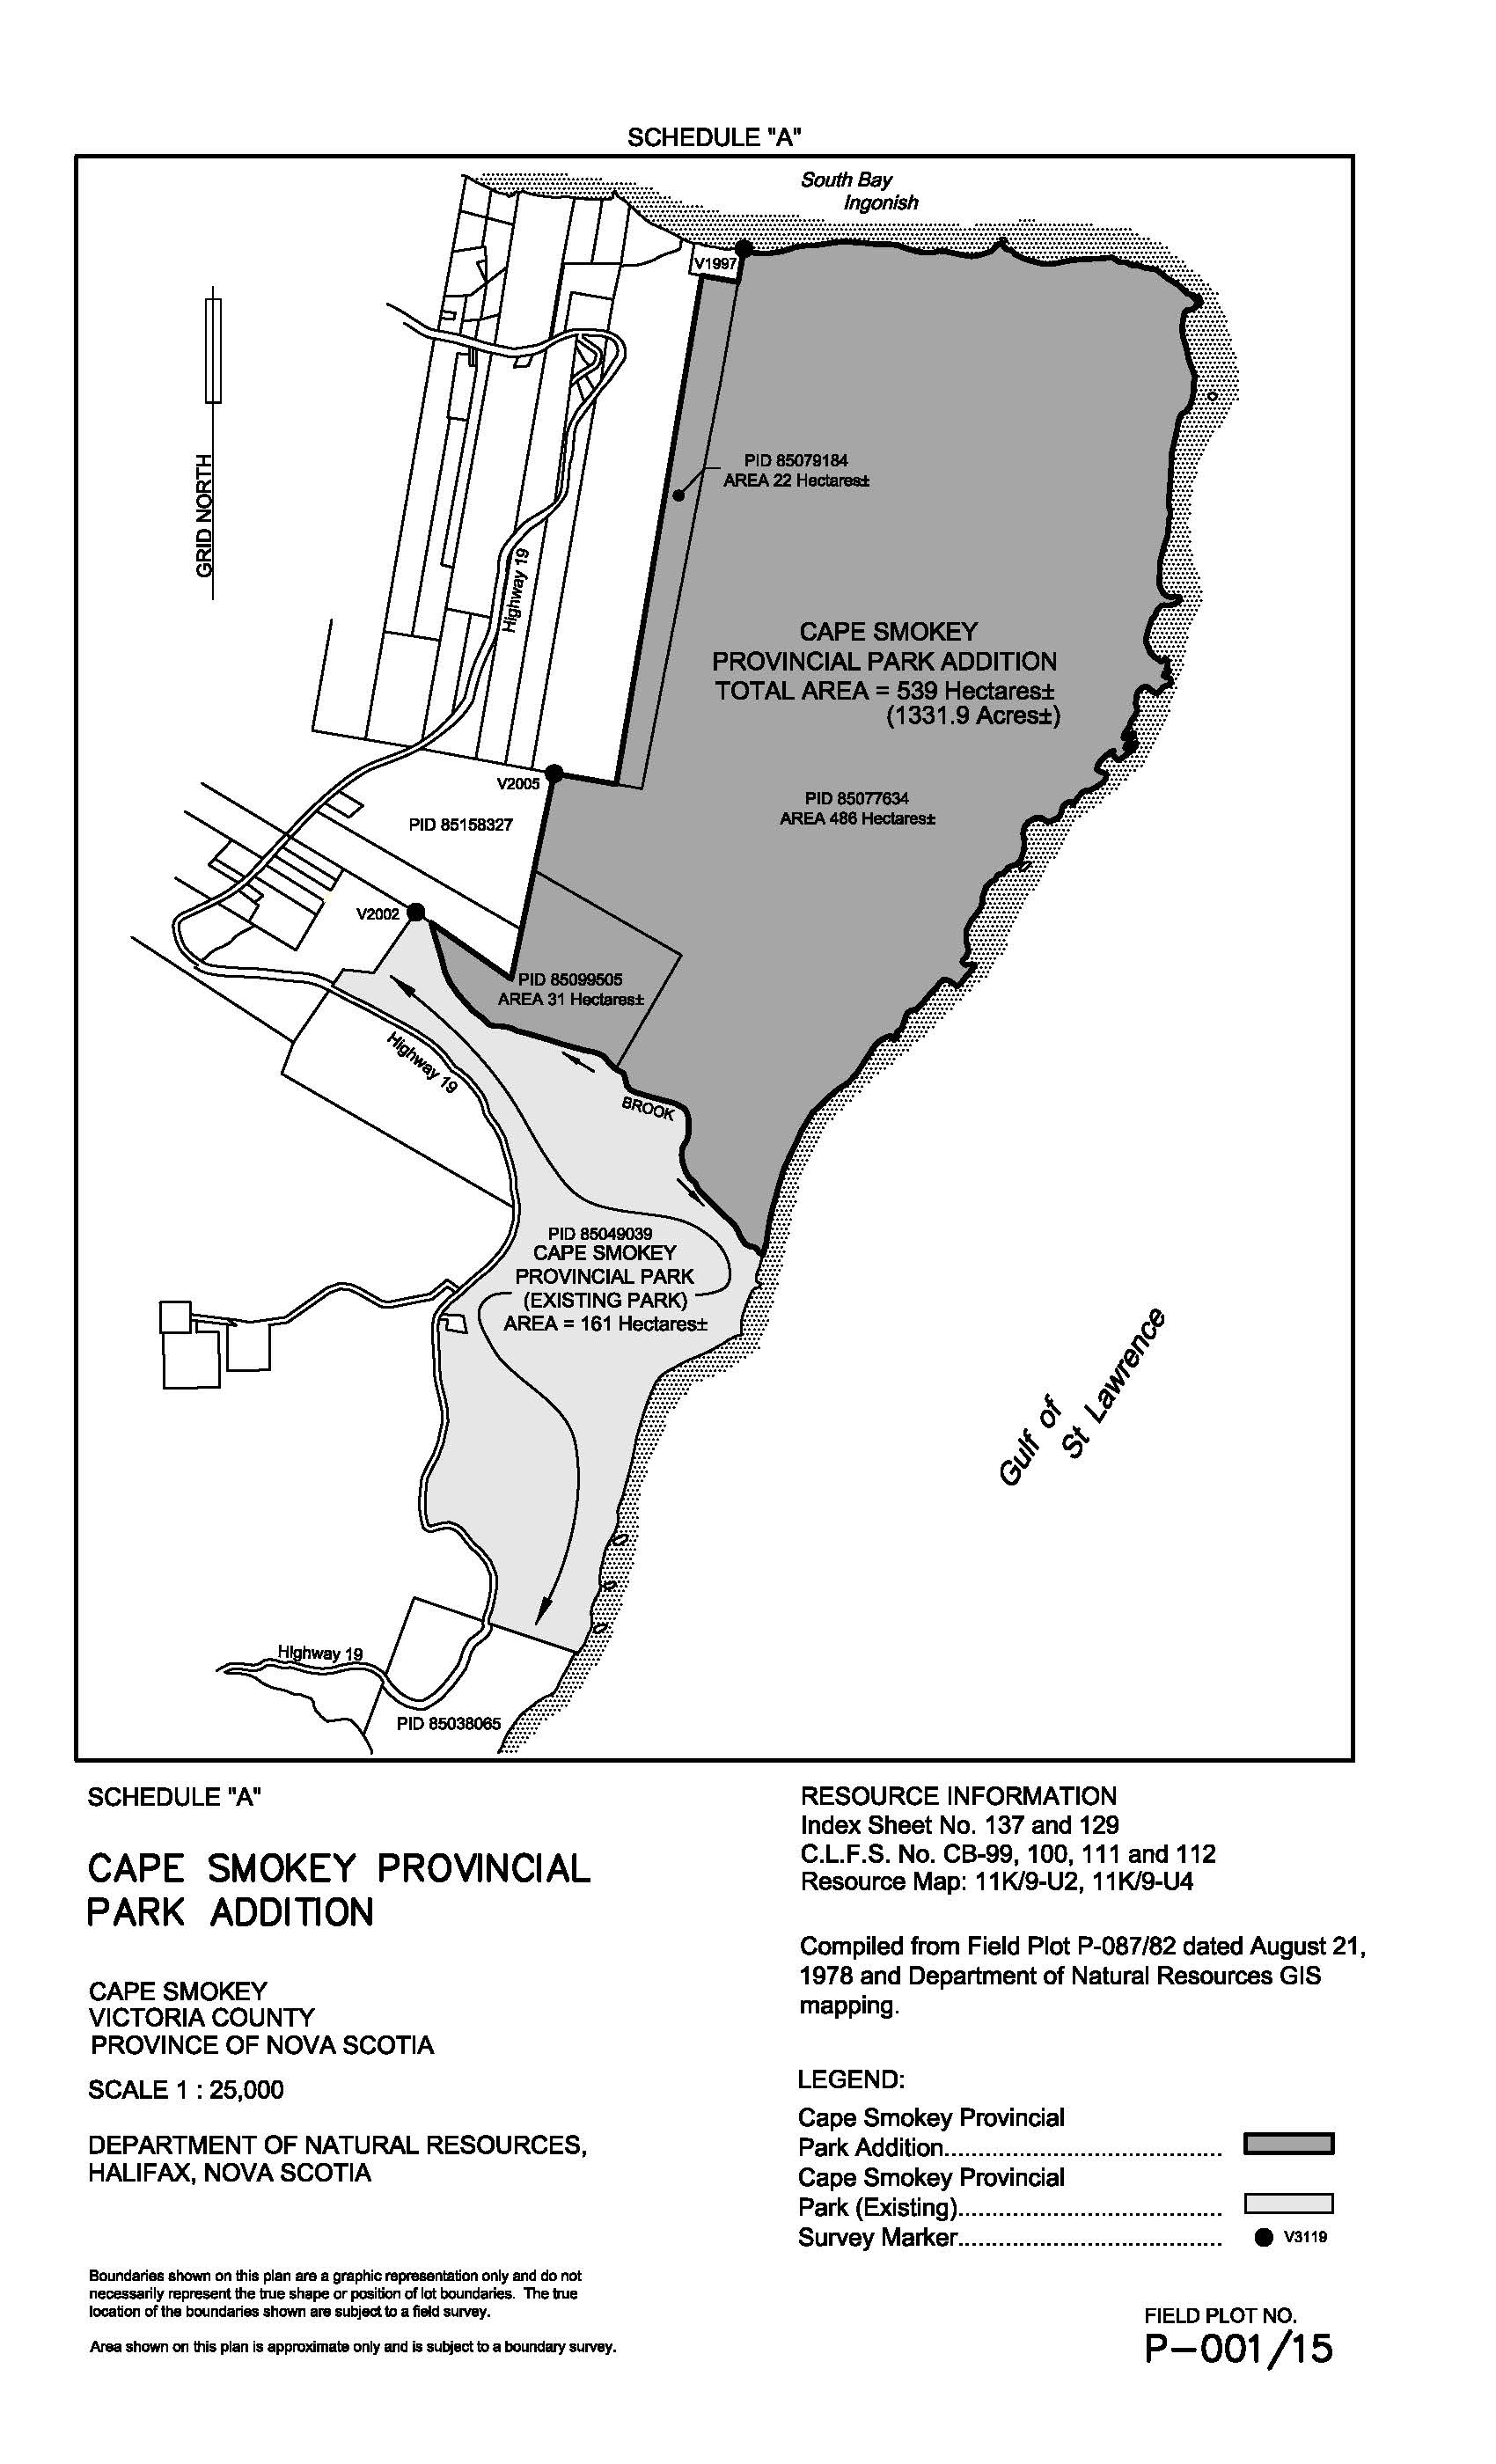 Addition to Cape Smokey Provincial Park